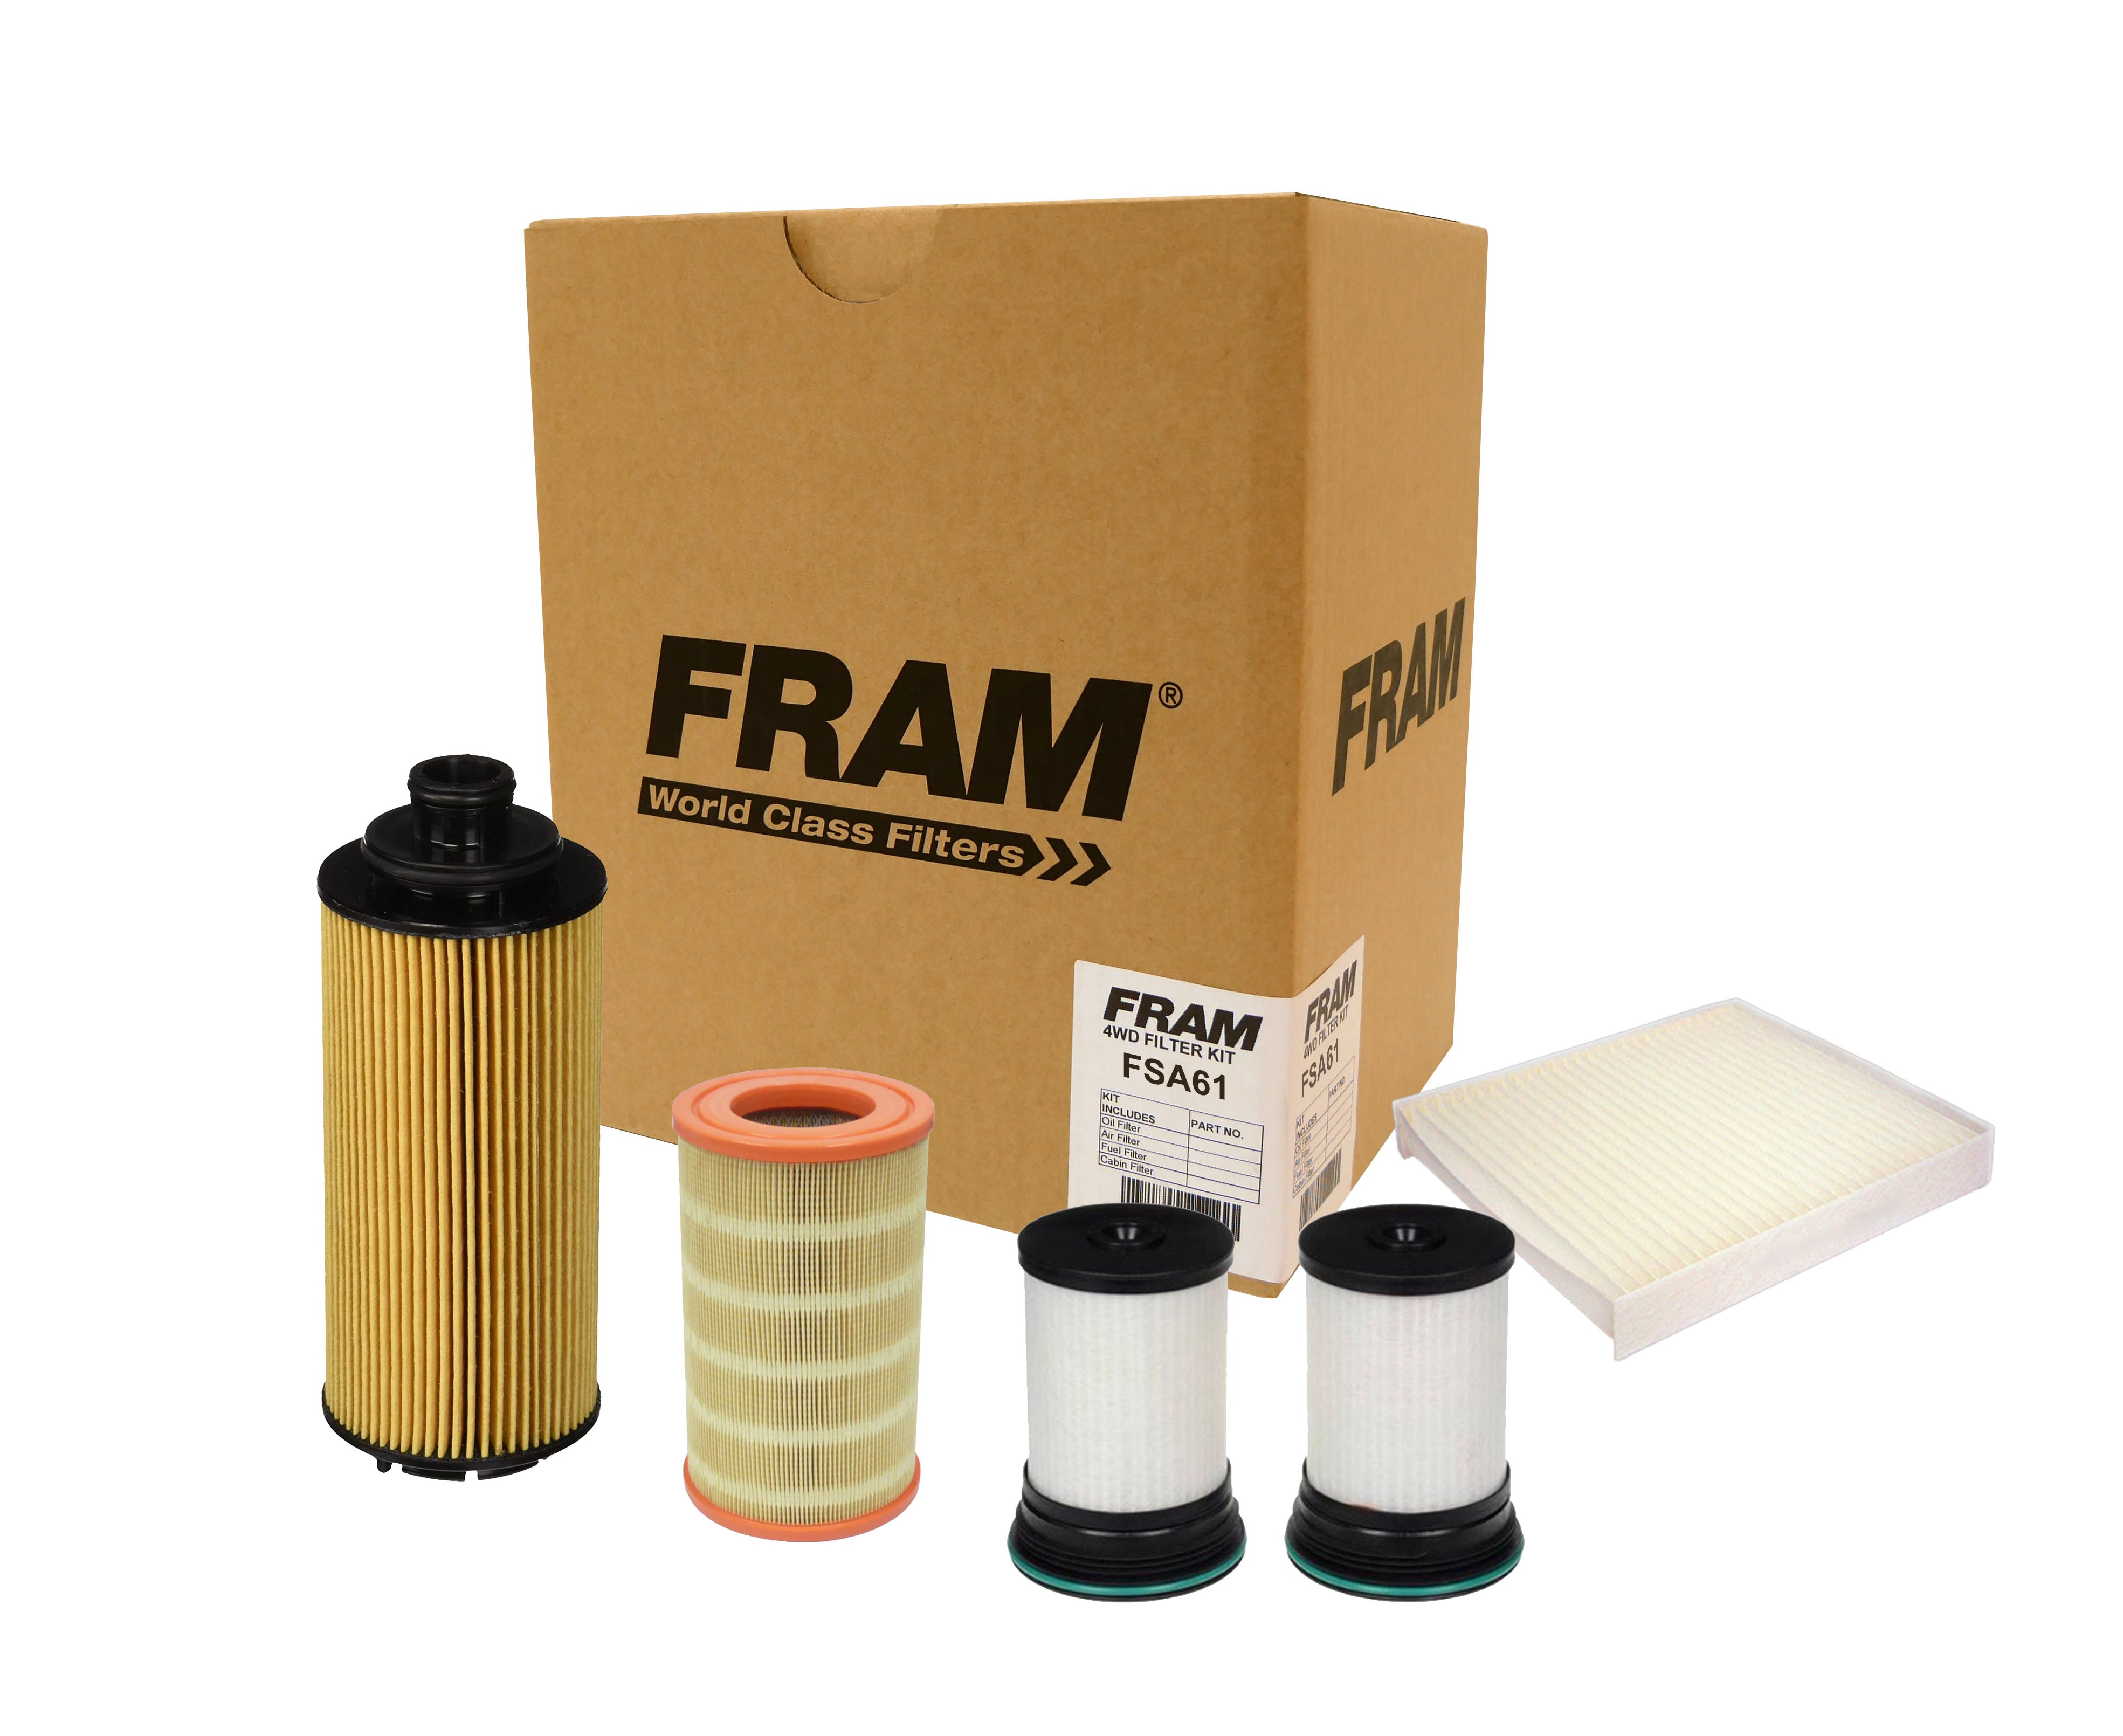 FRAM 4wd Filter Kit for Holden Colorado RG 12-20 | FRAM